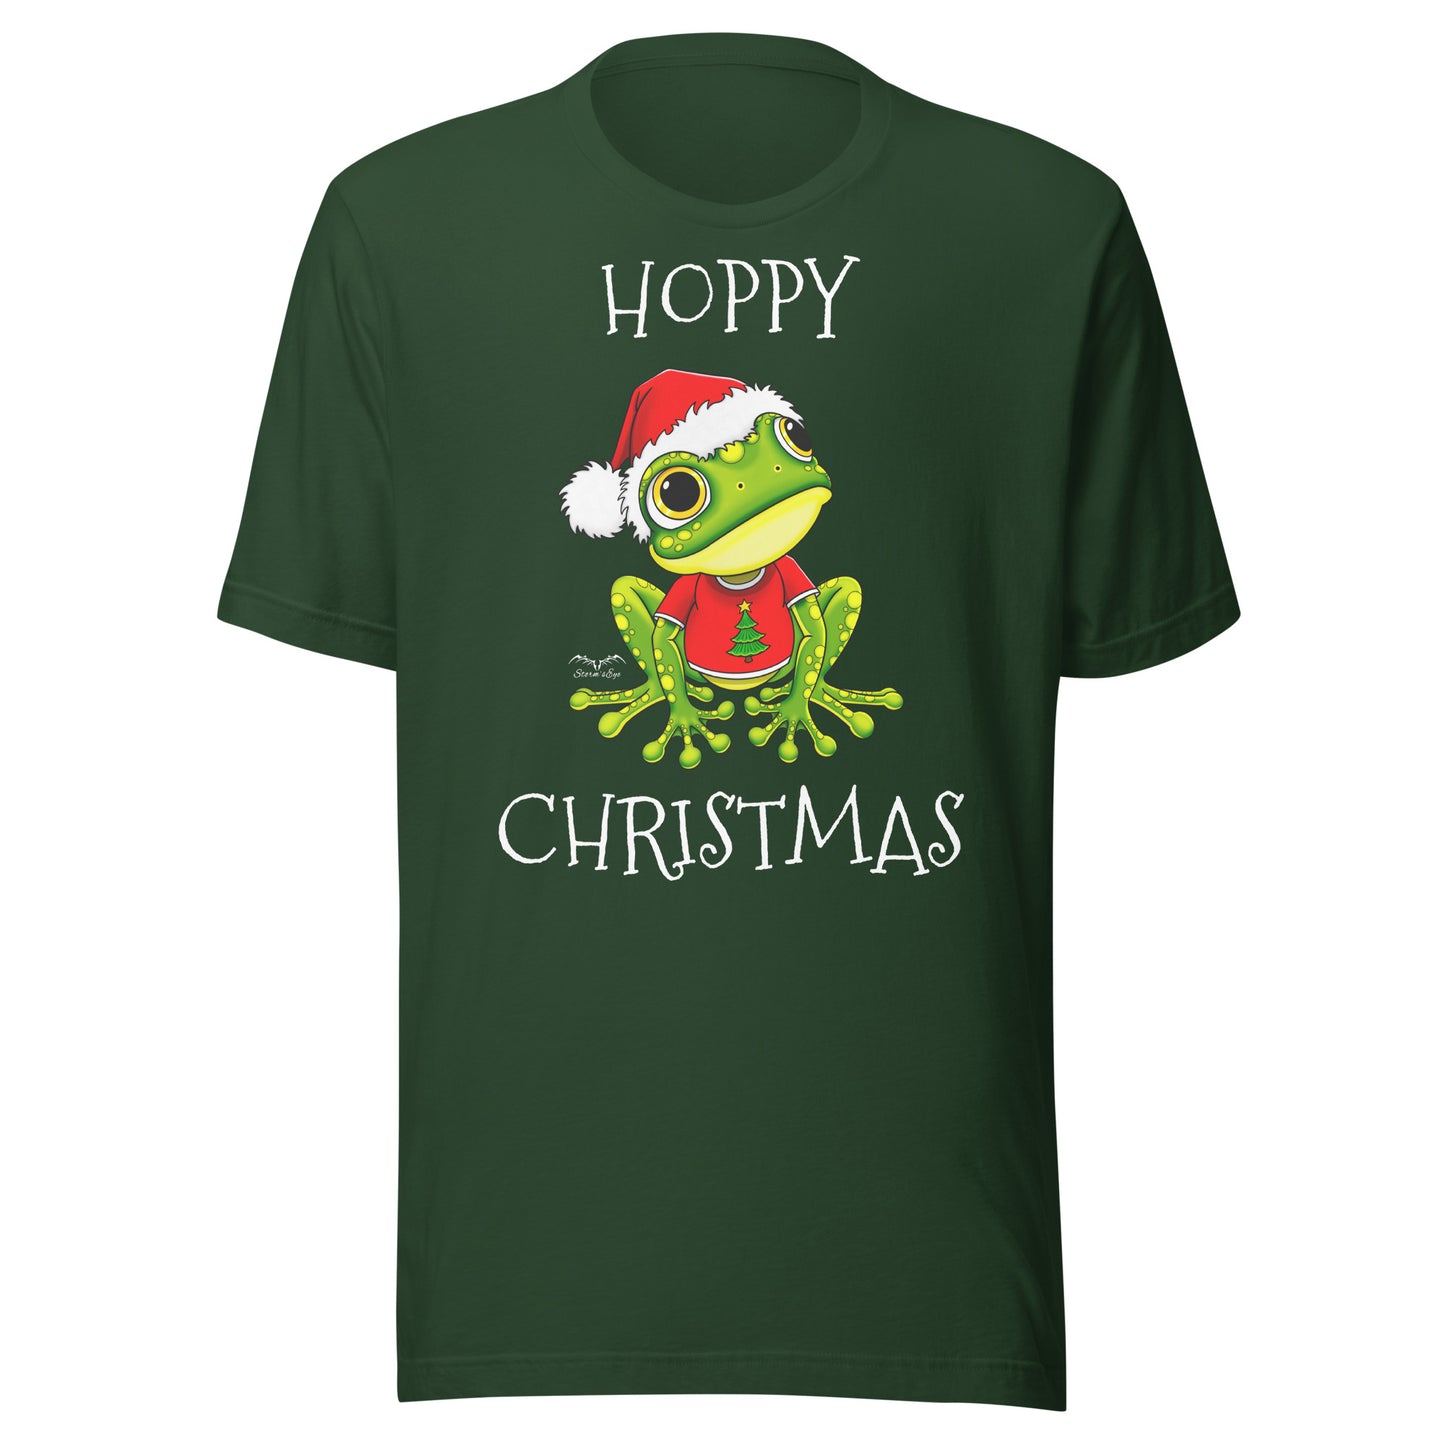 stormseye design hoppy christmas santa frog T shirt, flat view forest green